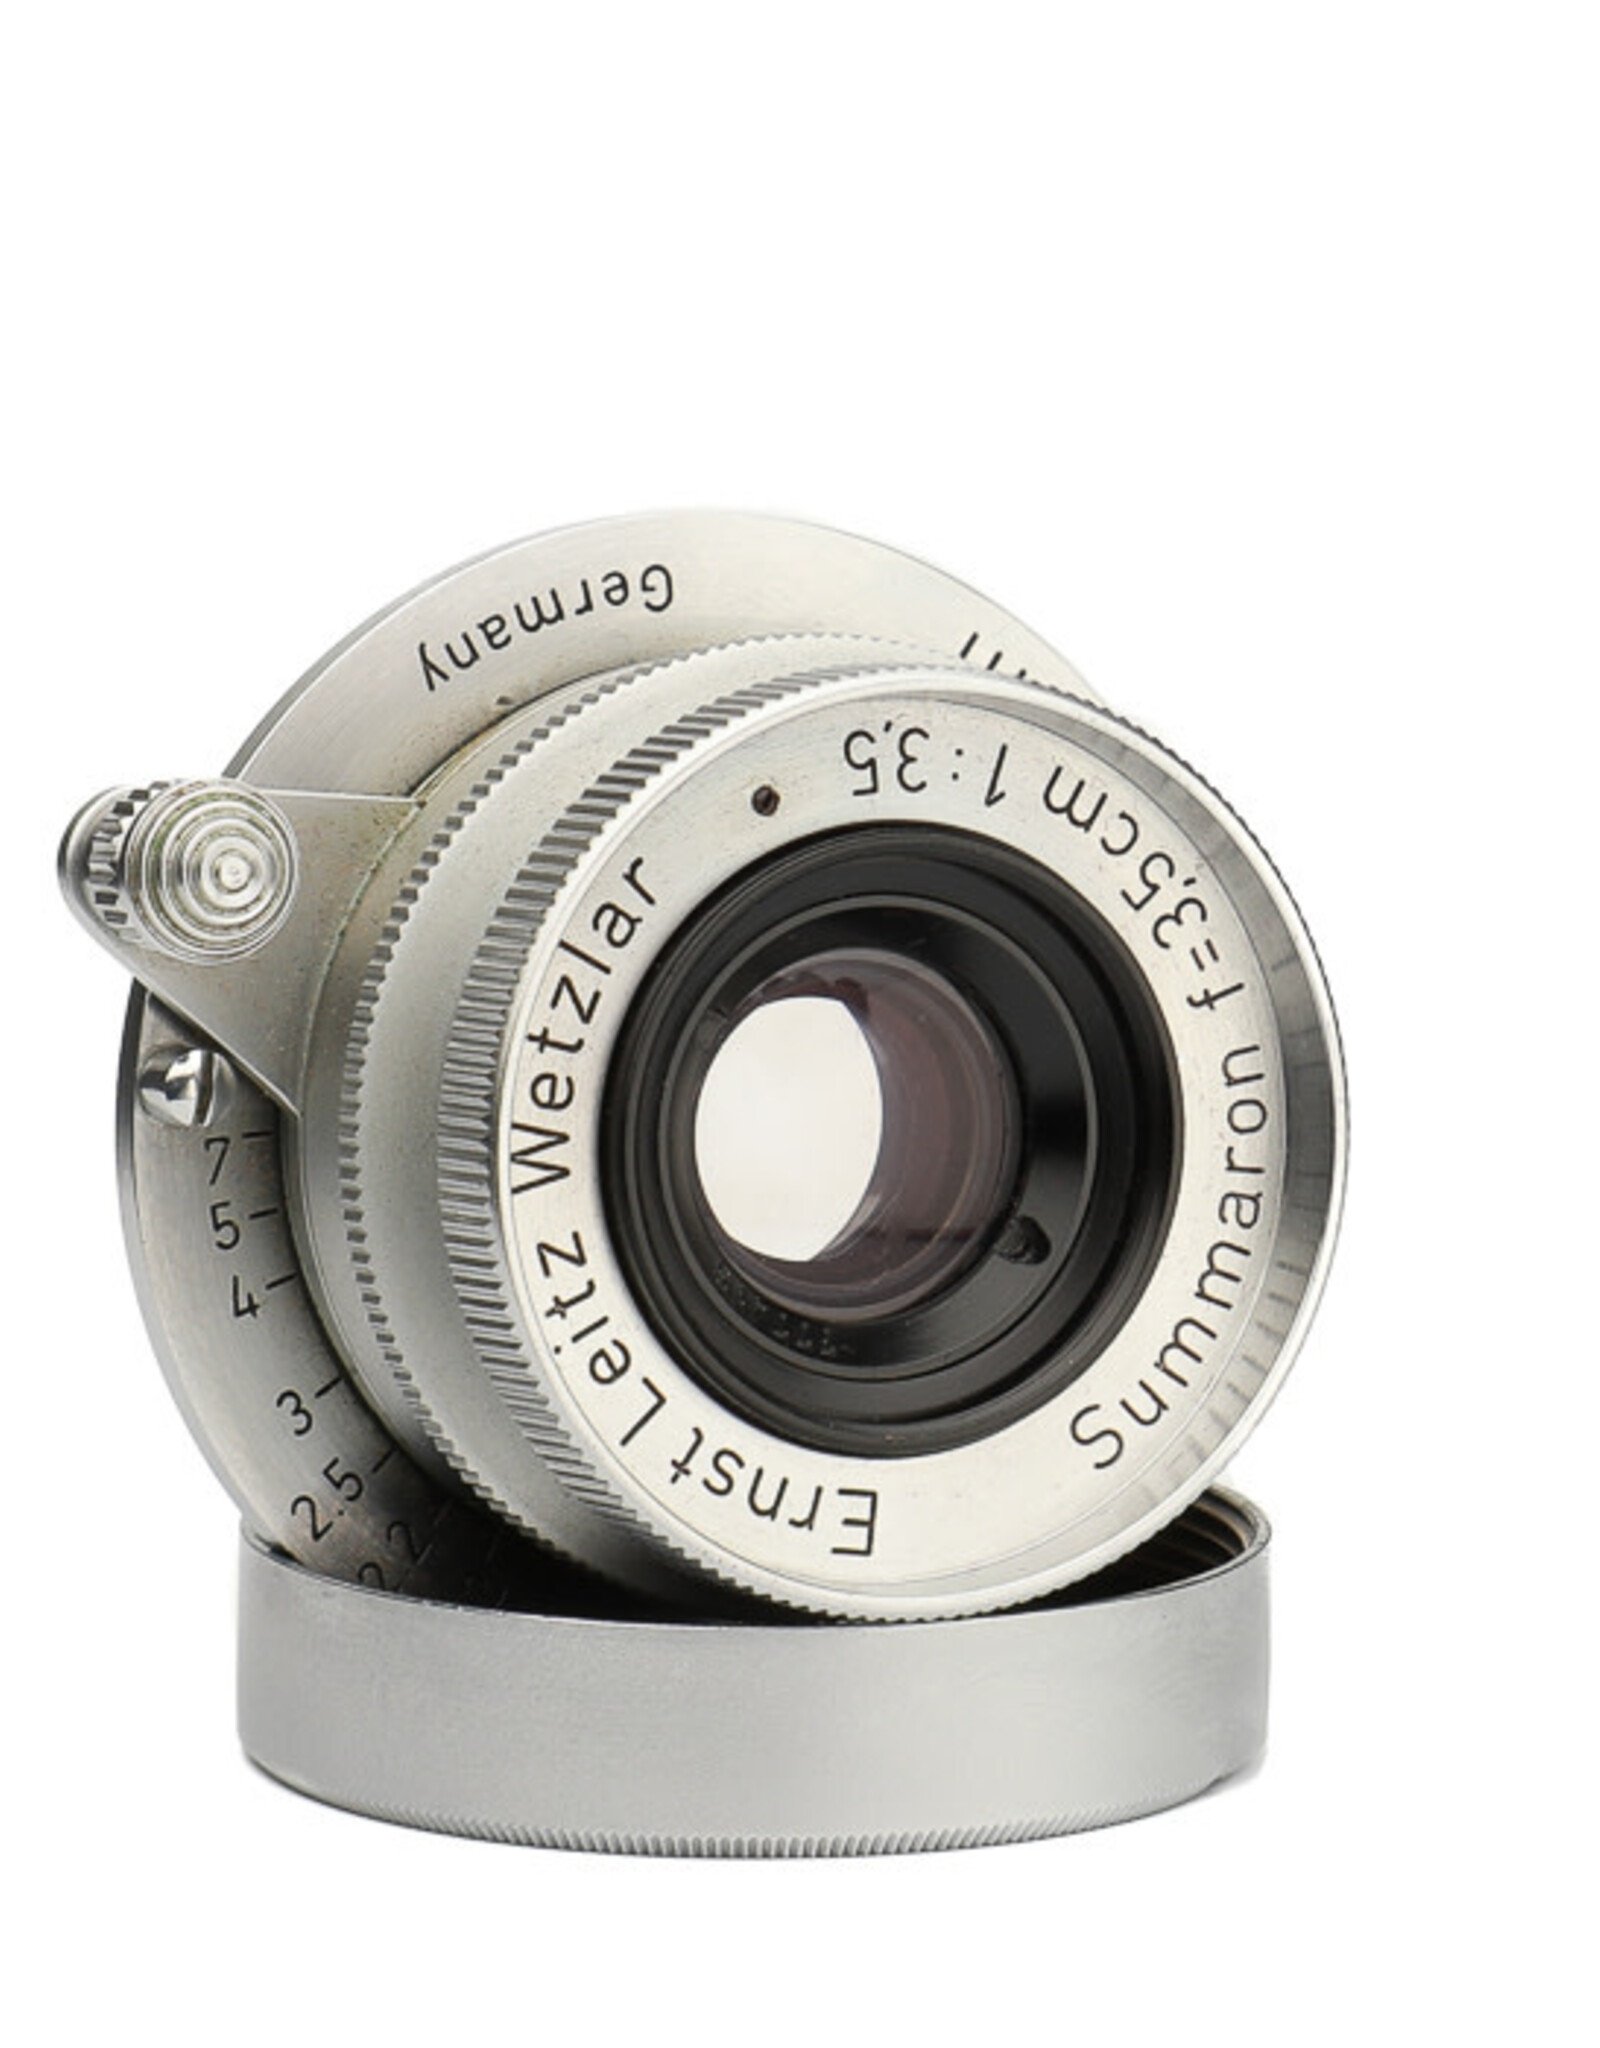 Leica Summaron 3.5cm (35mm) f3.5 M39 Lens - Acme Camera Co.